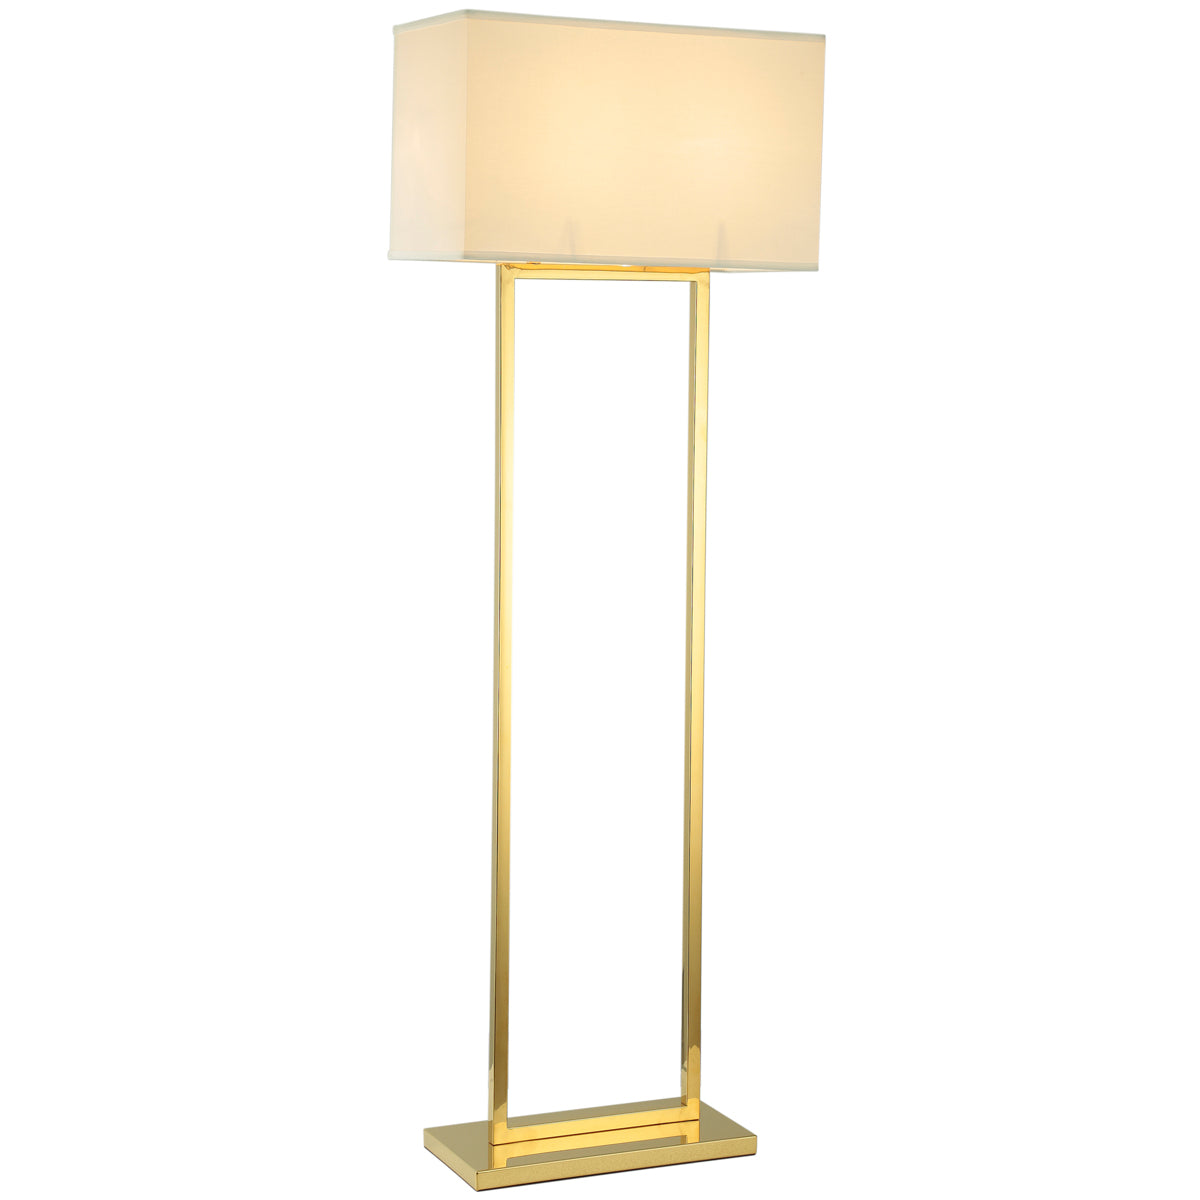 CGC CARINA Gold Contemporary Floor Lamp with cream shade